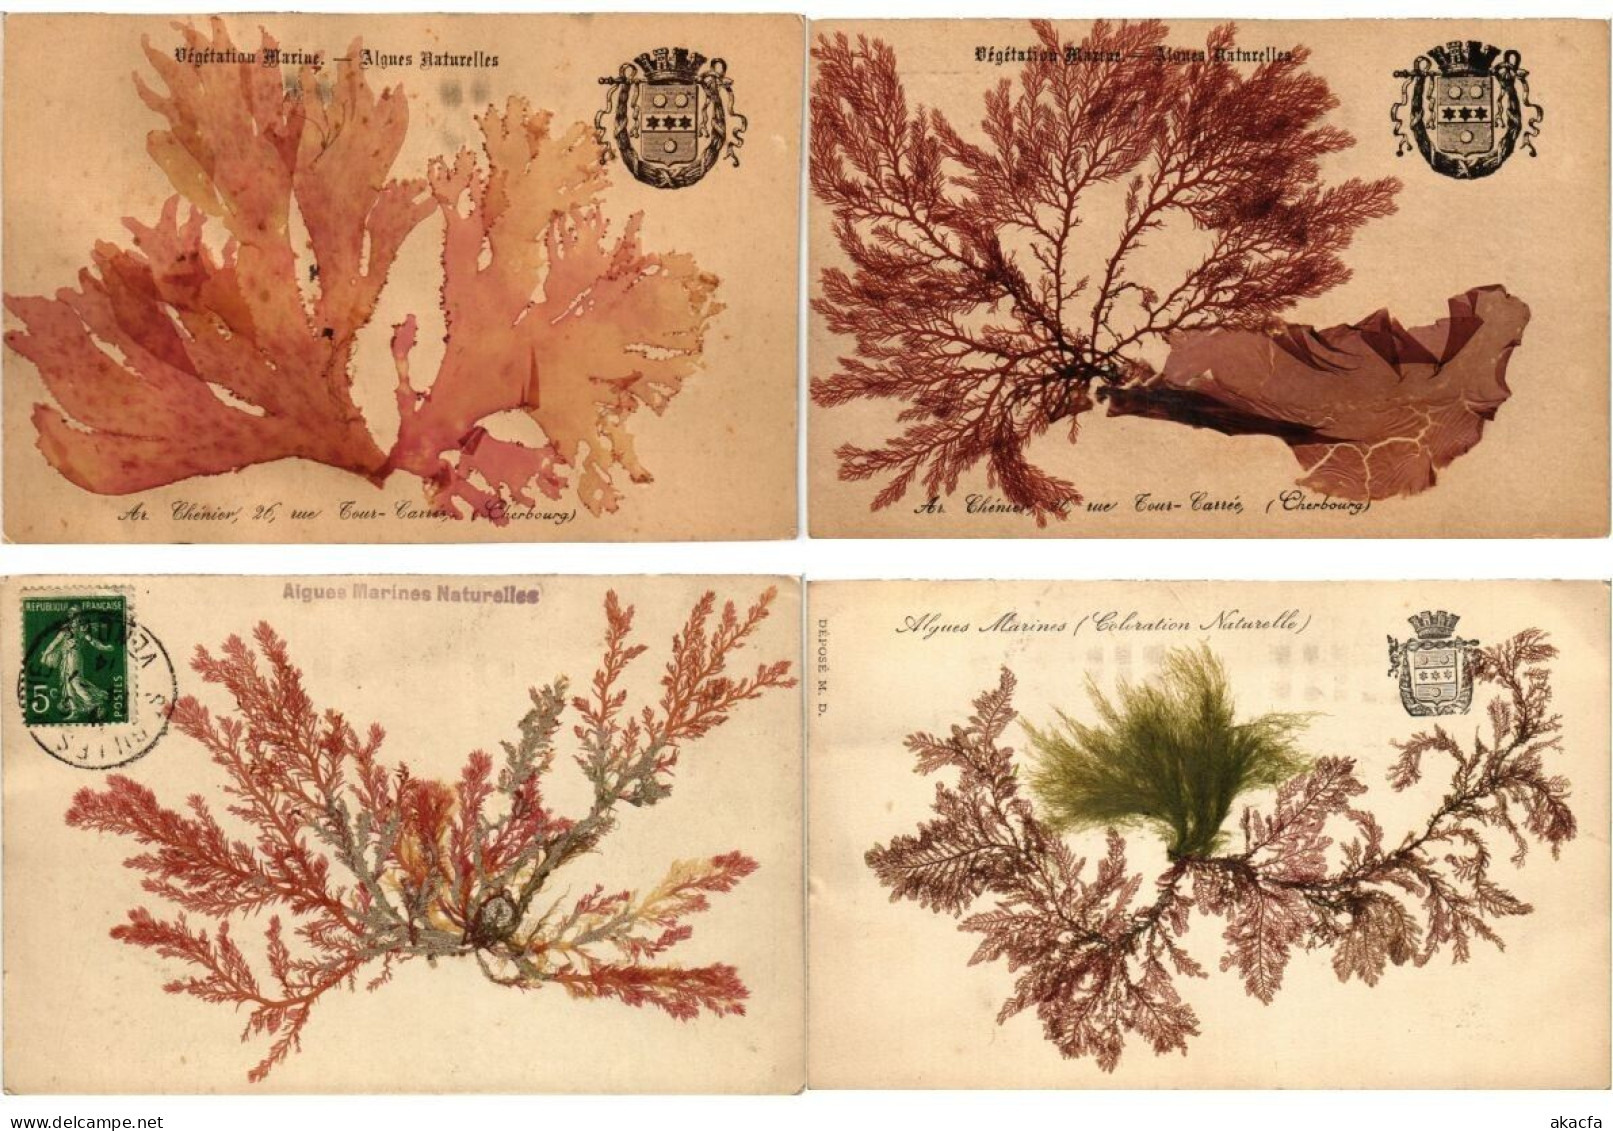 SEA PLANTS ALGUES NATURELLES, HANDMADE, FRANCE, 17 Vintage Postcards (L6230) - Sammlungen & Sammellose